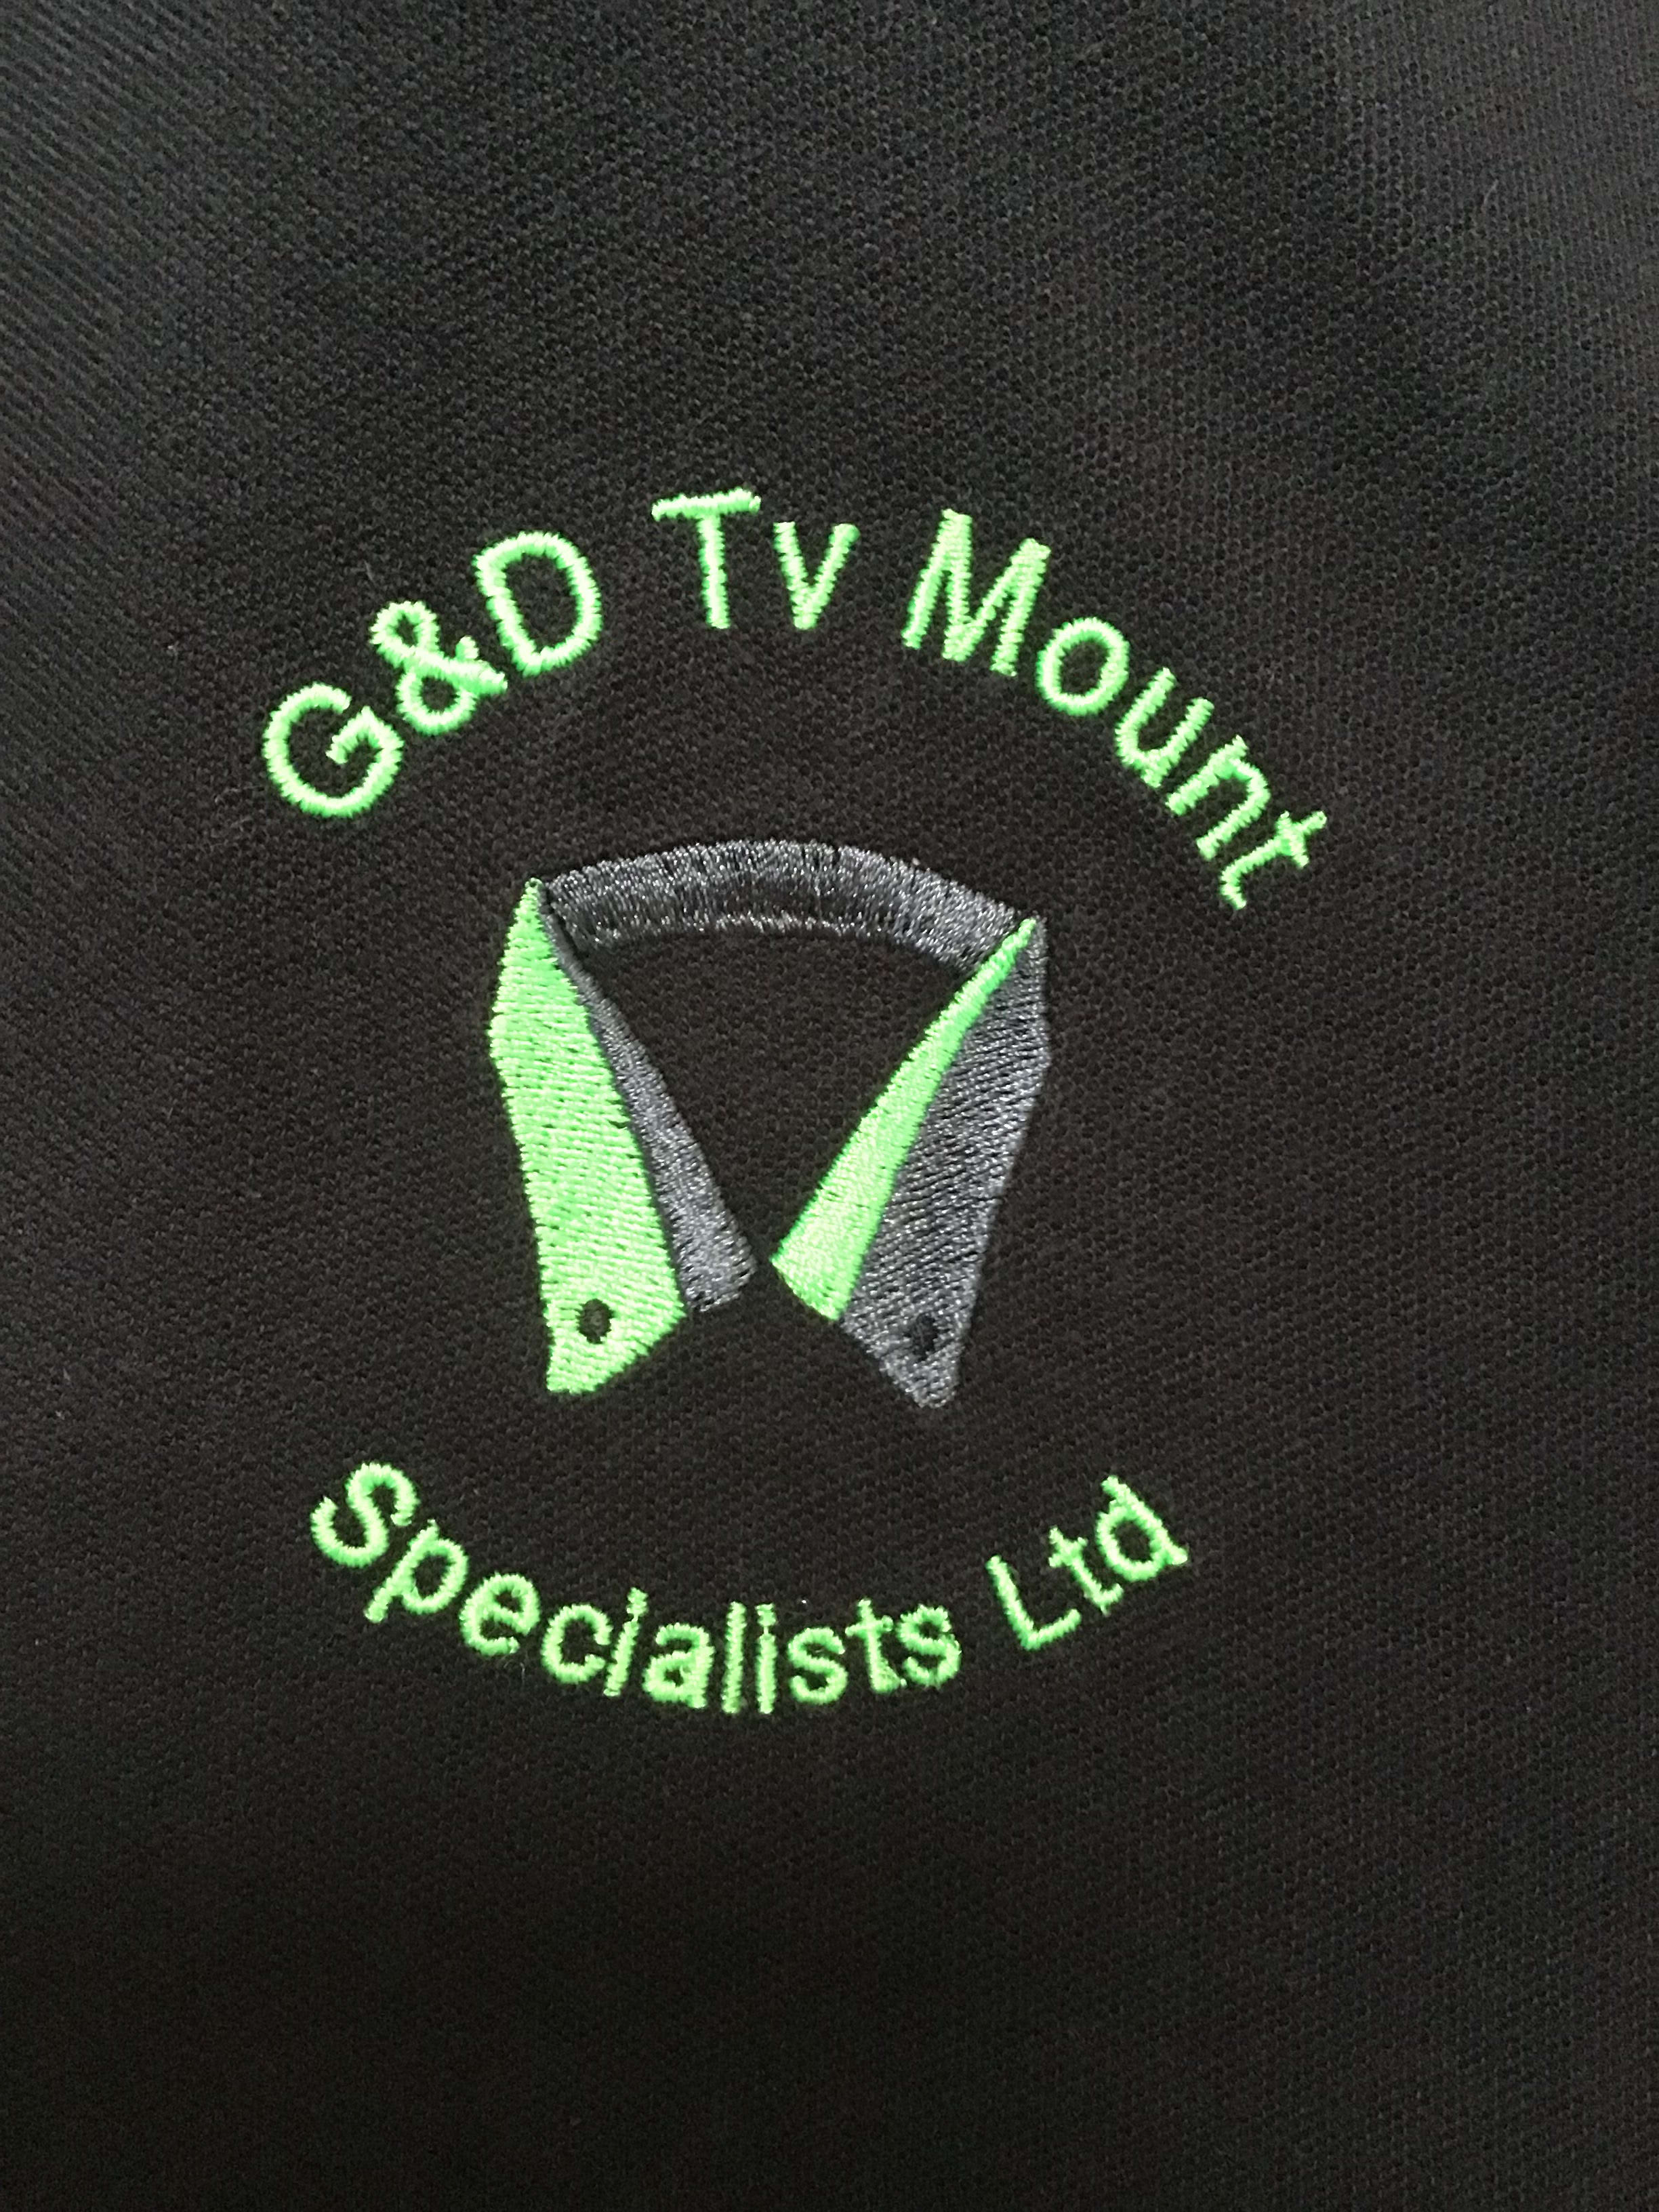 G&D TV Mount Specialists LTD